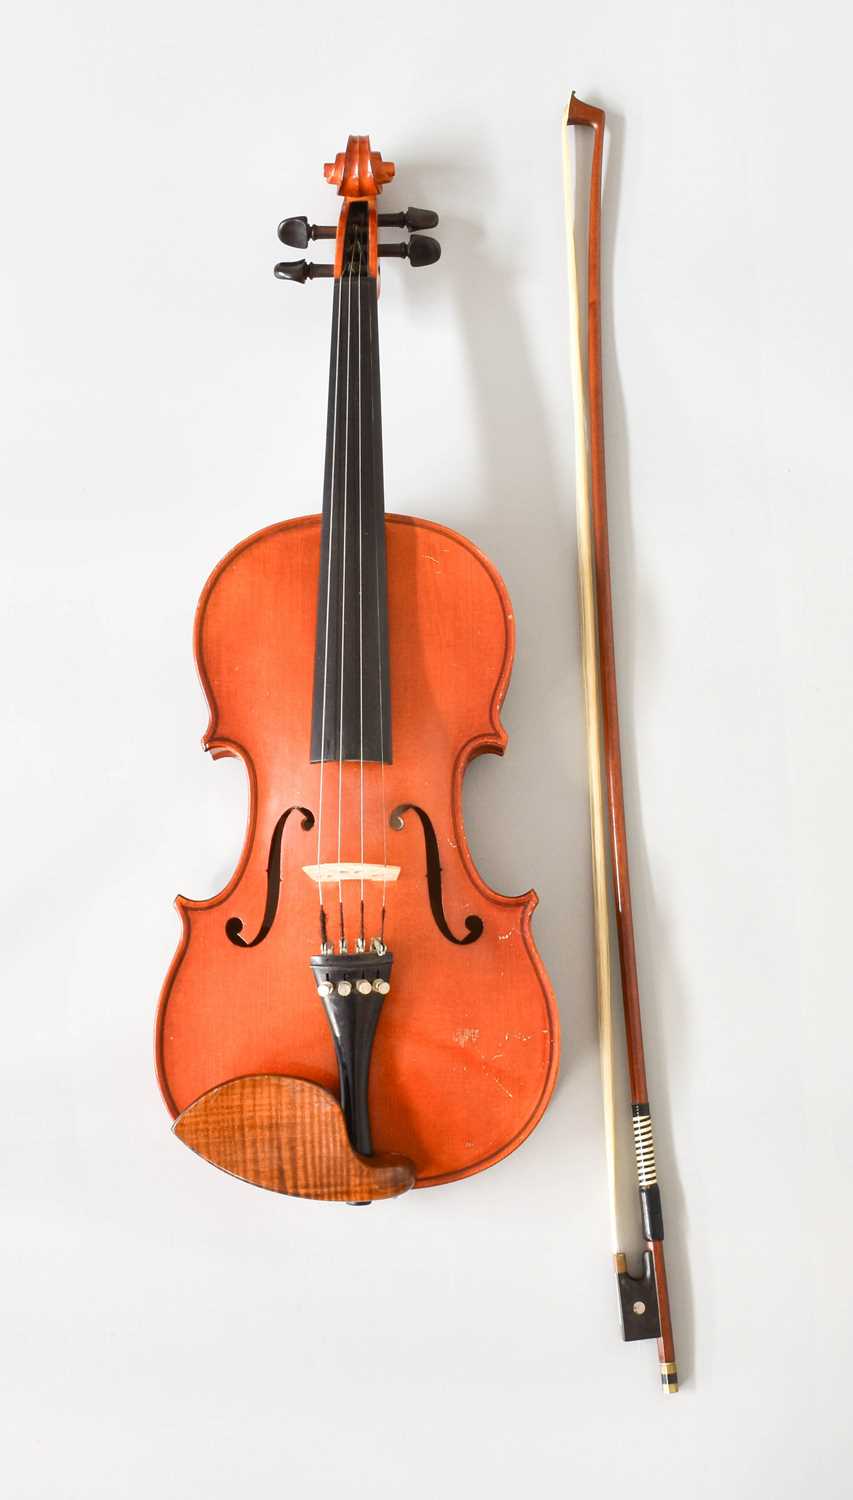 Lot 29 - Violin